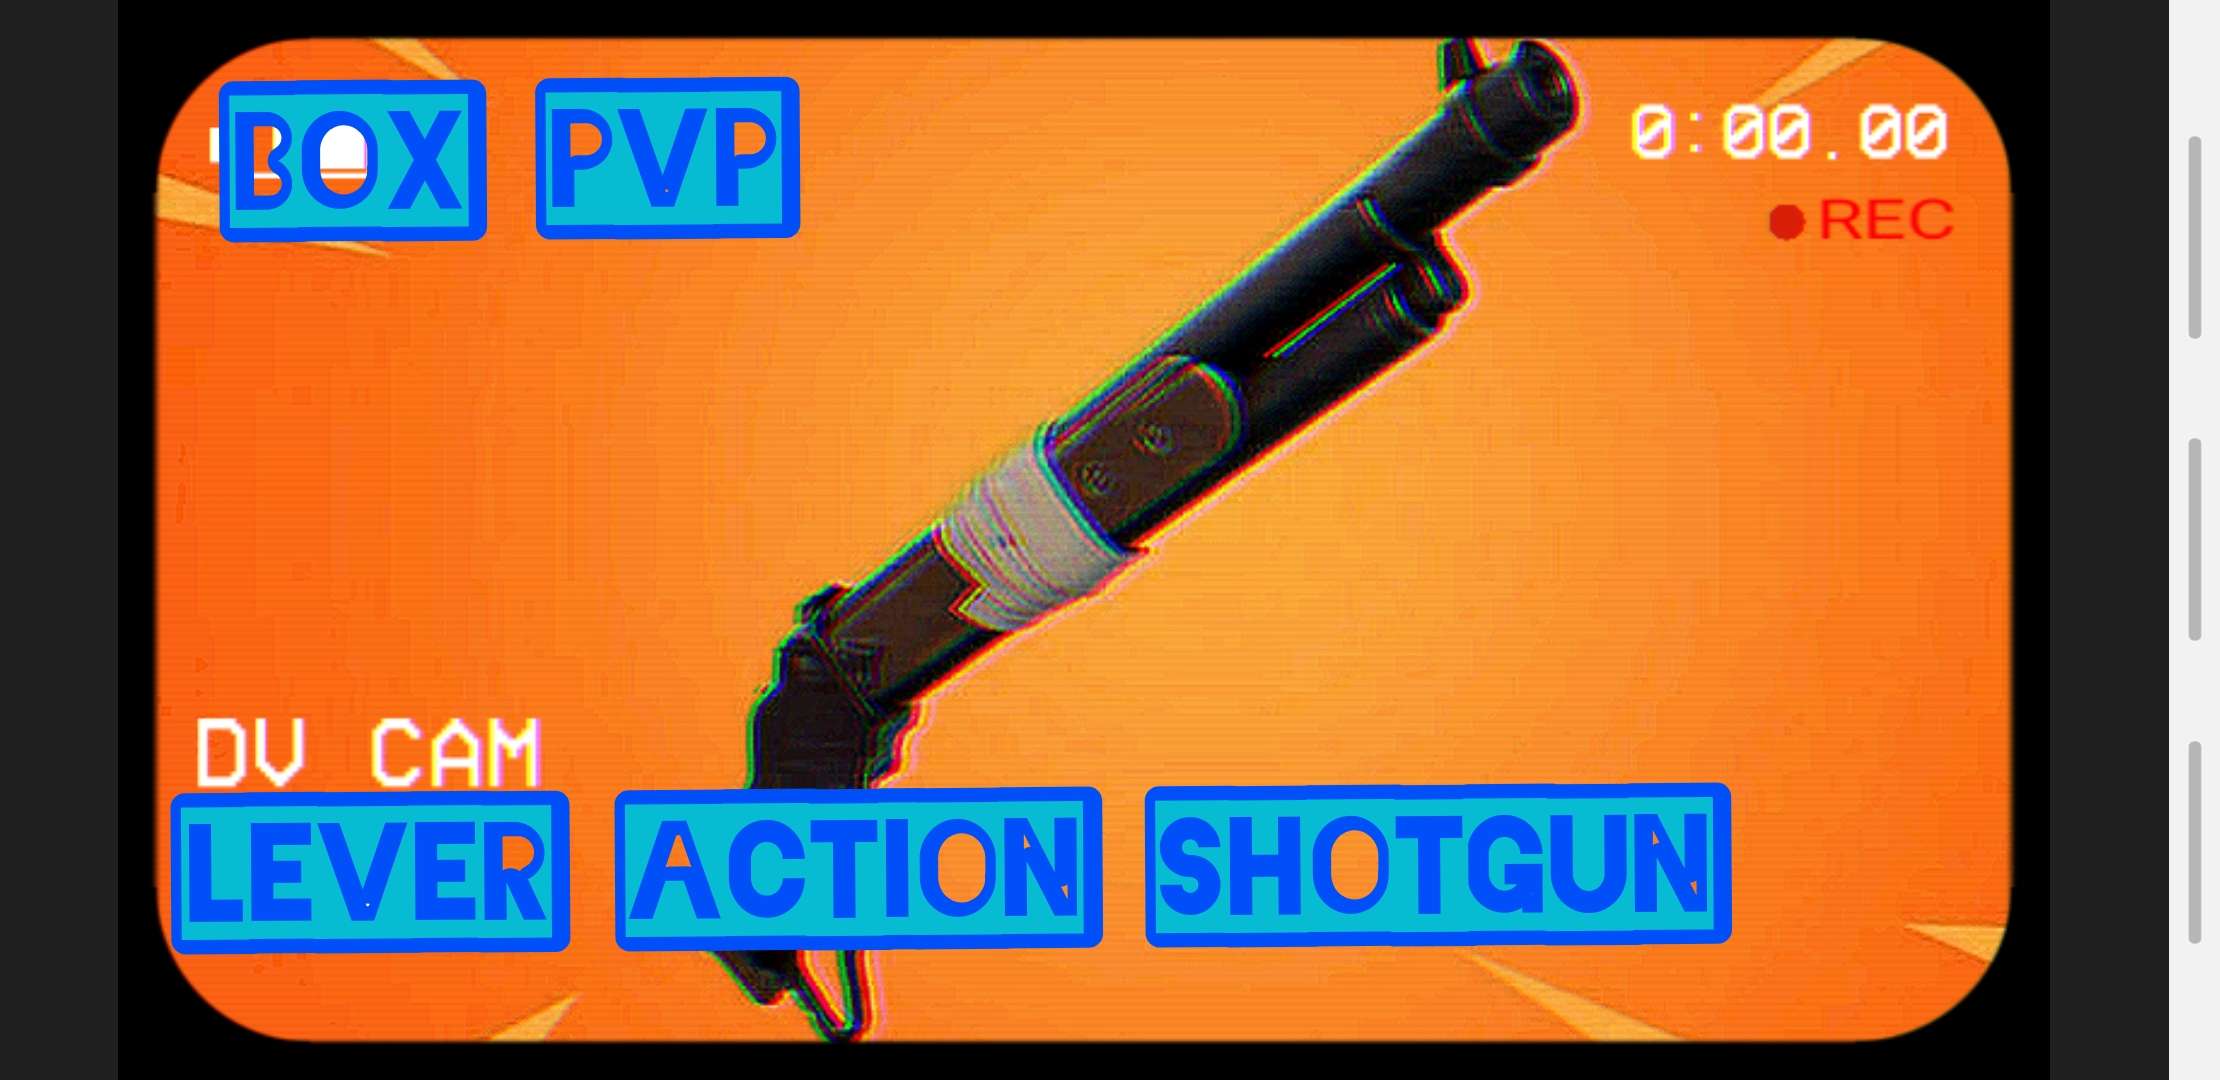 Lever Action Shotgun "BOX PVP"